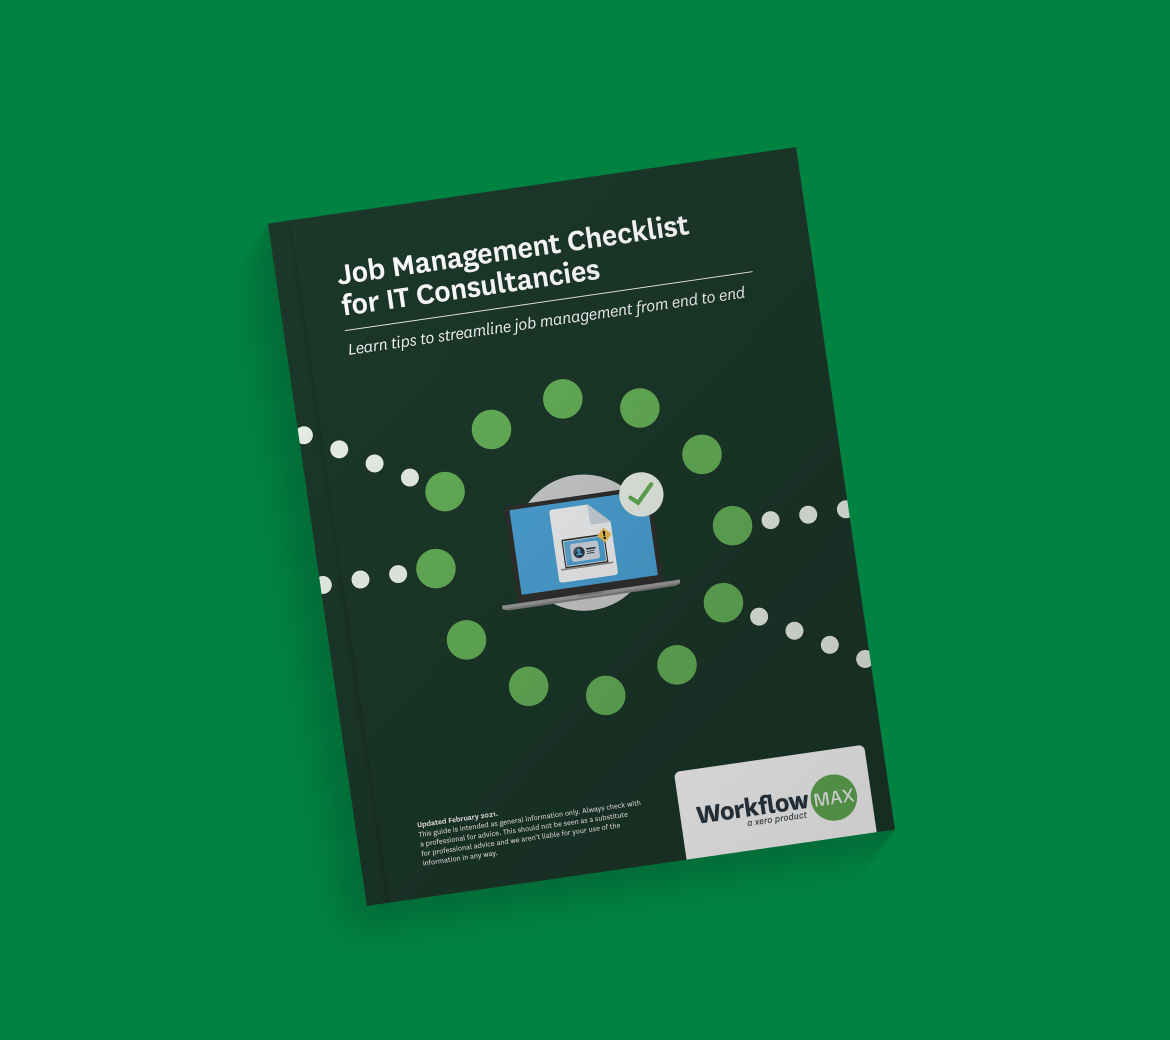 Free download: Job Management Checklist for IT Consultancies